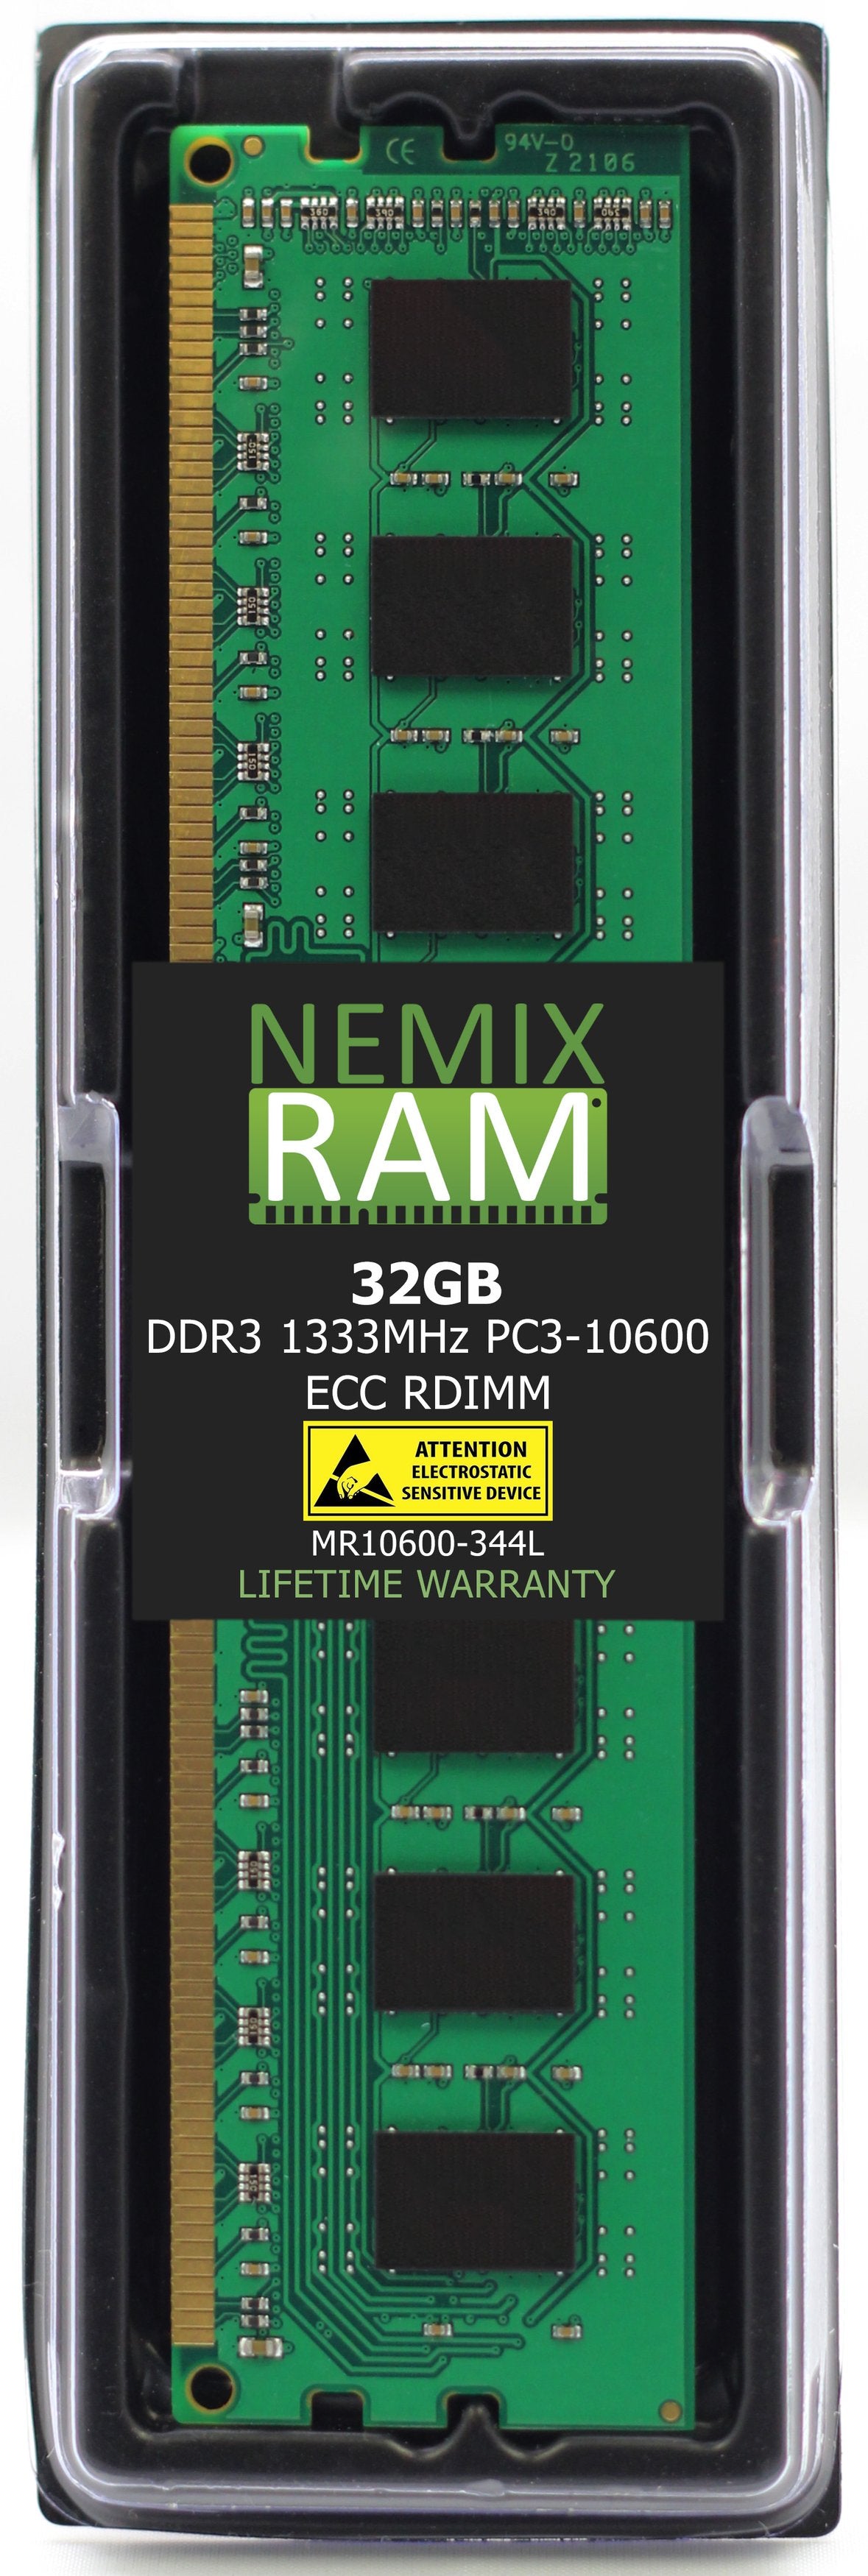 Hynix HMT84GR7MMR4A-H9 32GB DDR3 1333MHZ PC3-10600 RDIMM Compatible Memory Module